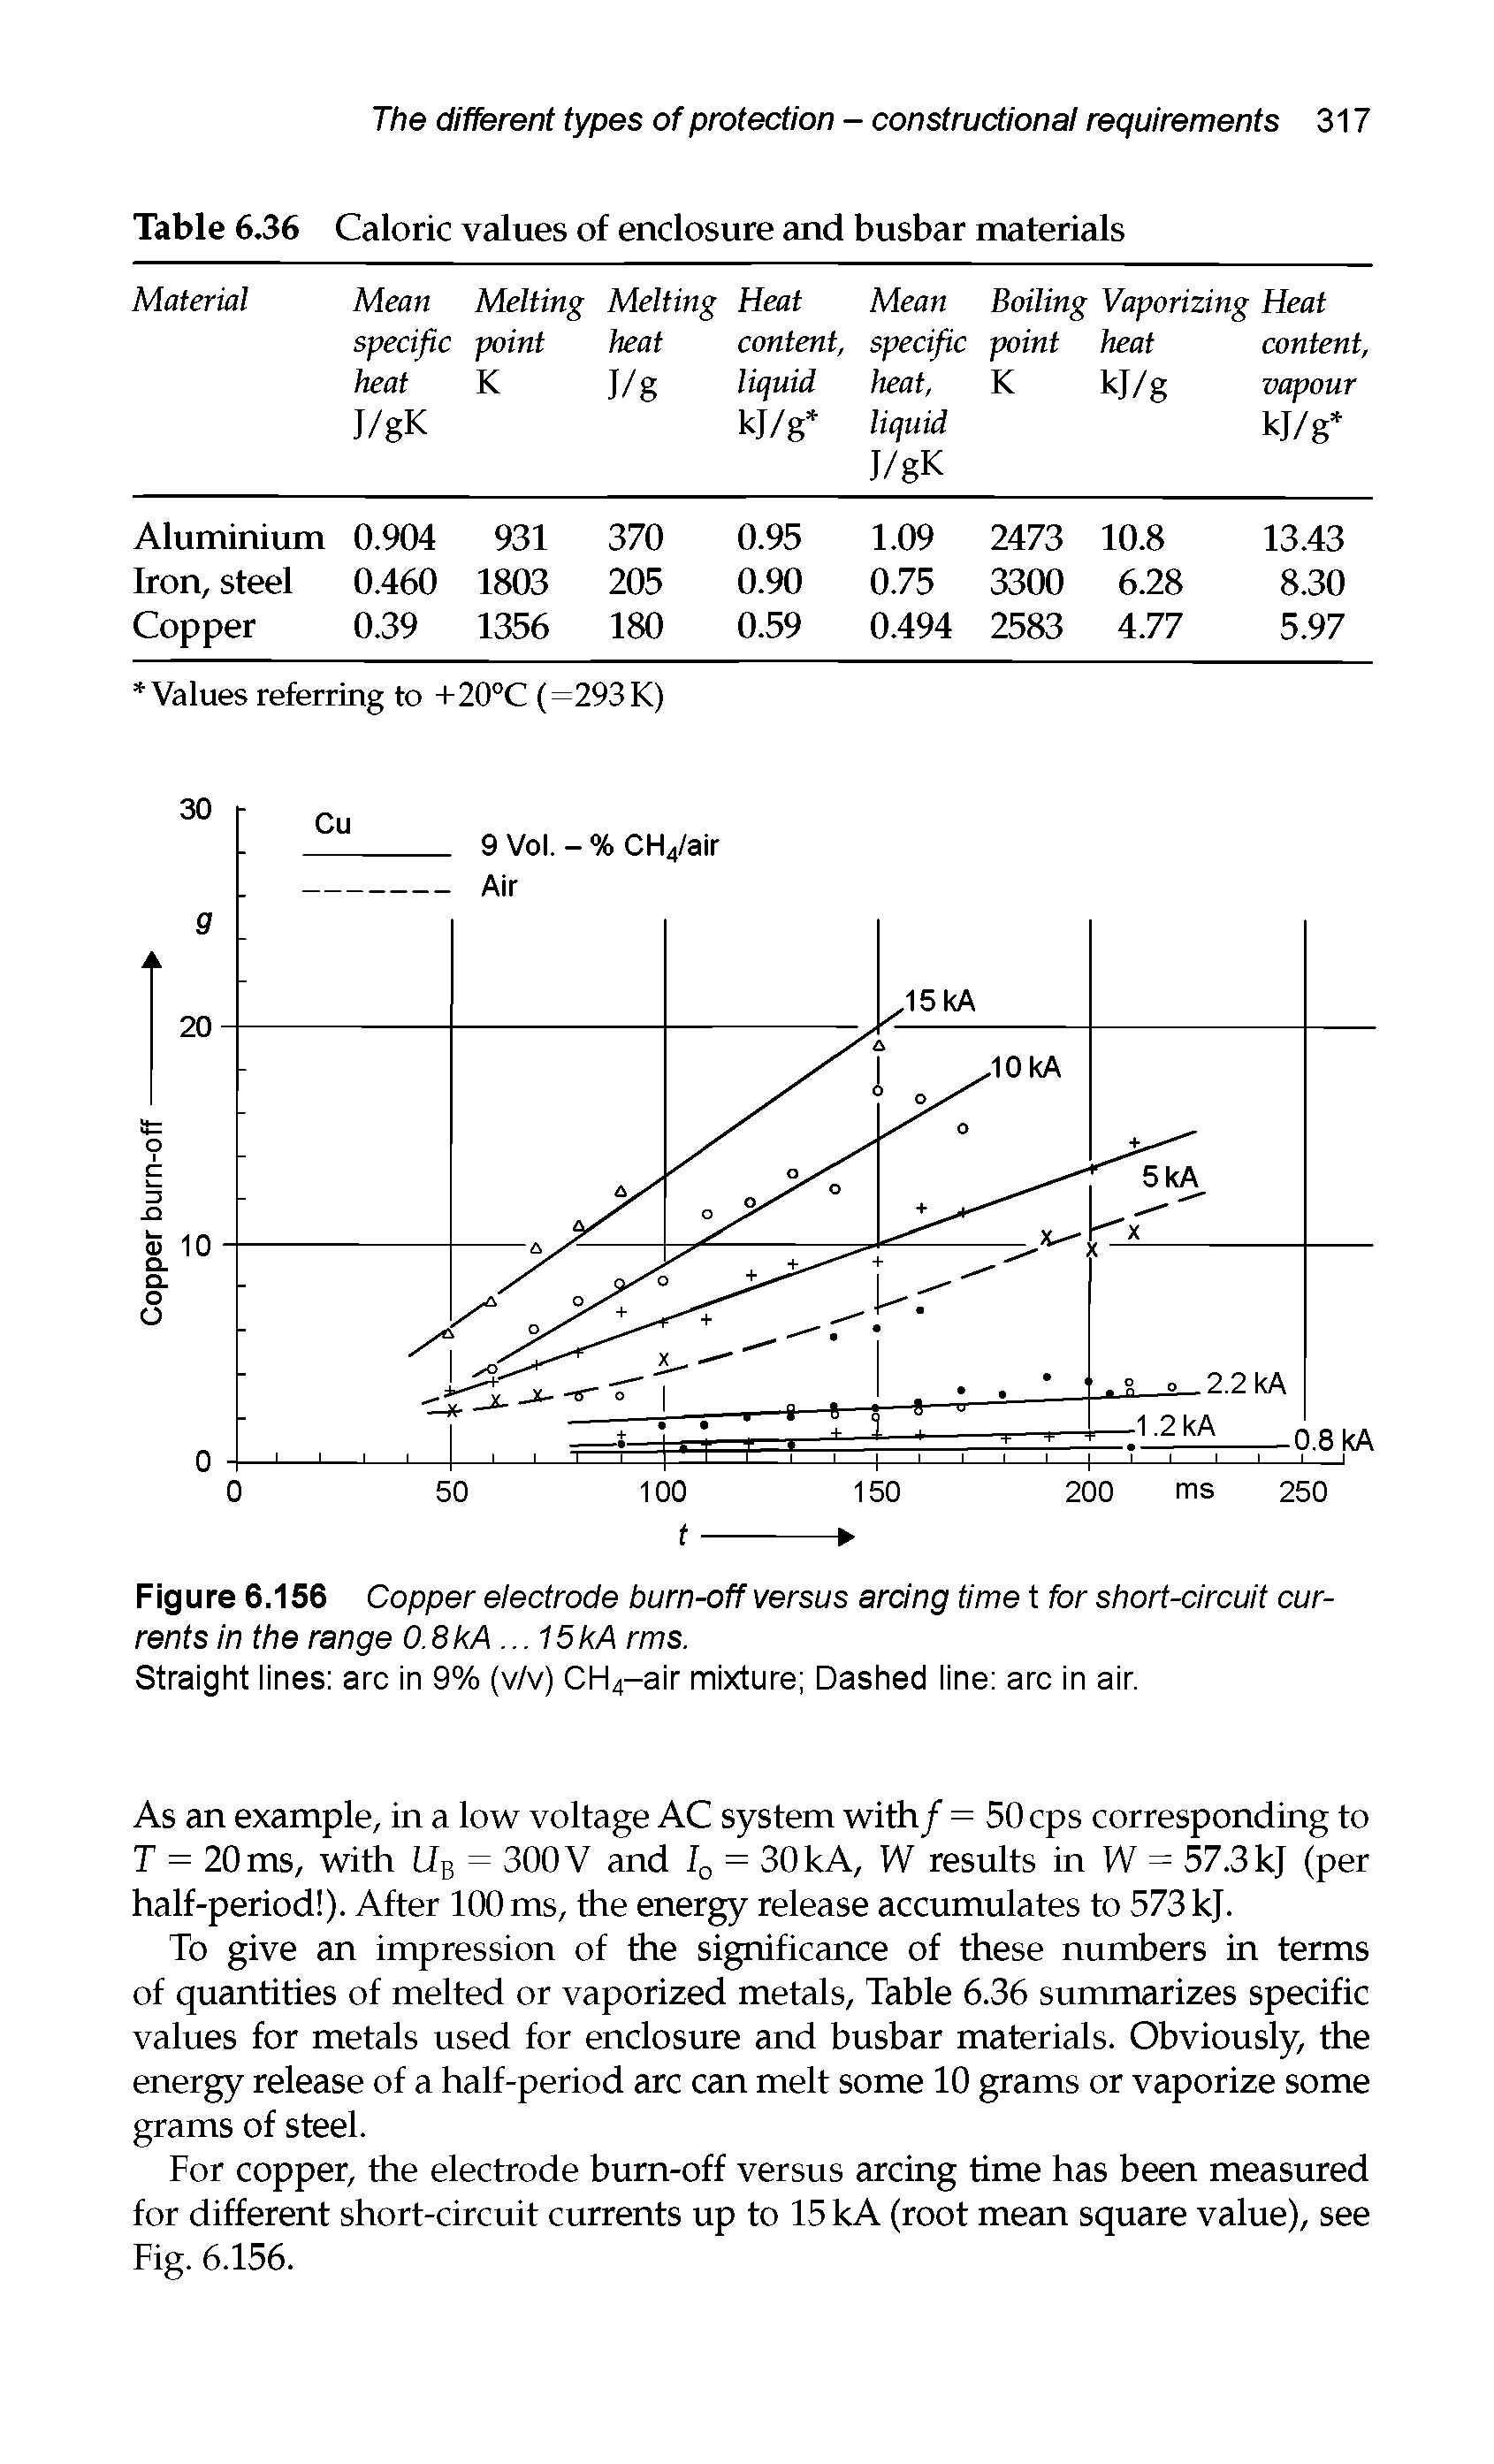 Figure 6.156 Copper electrode burn-off versus arcing time t for short-circuit currents in the range 0.8kA. ..15kA rms.